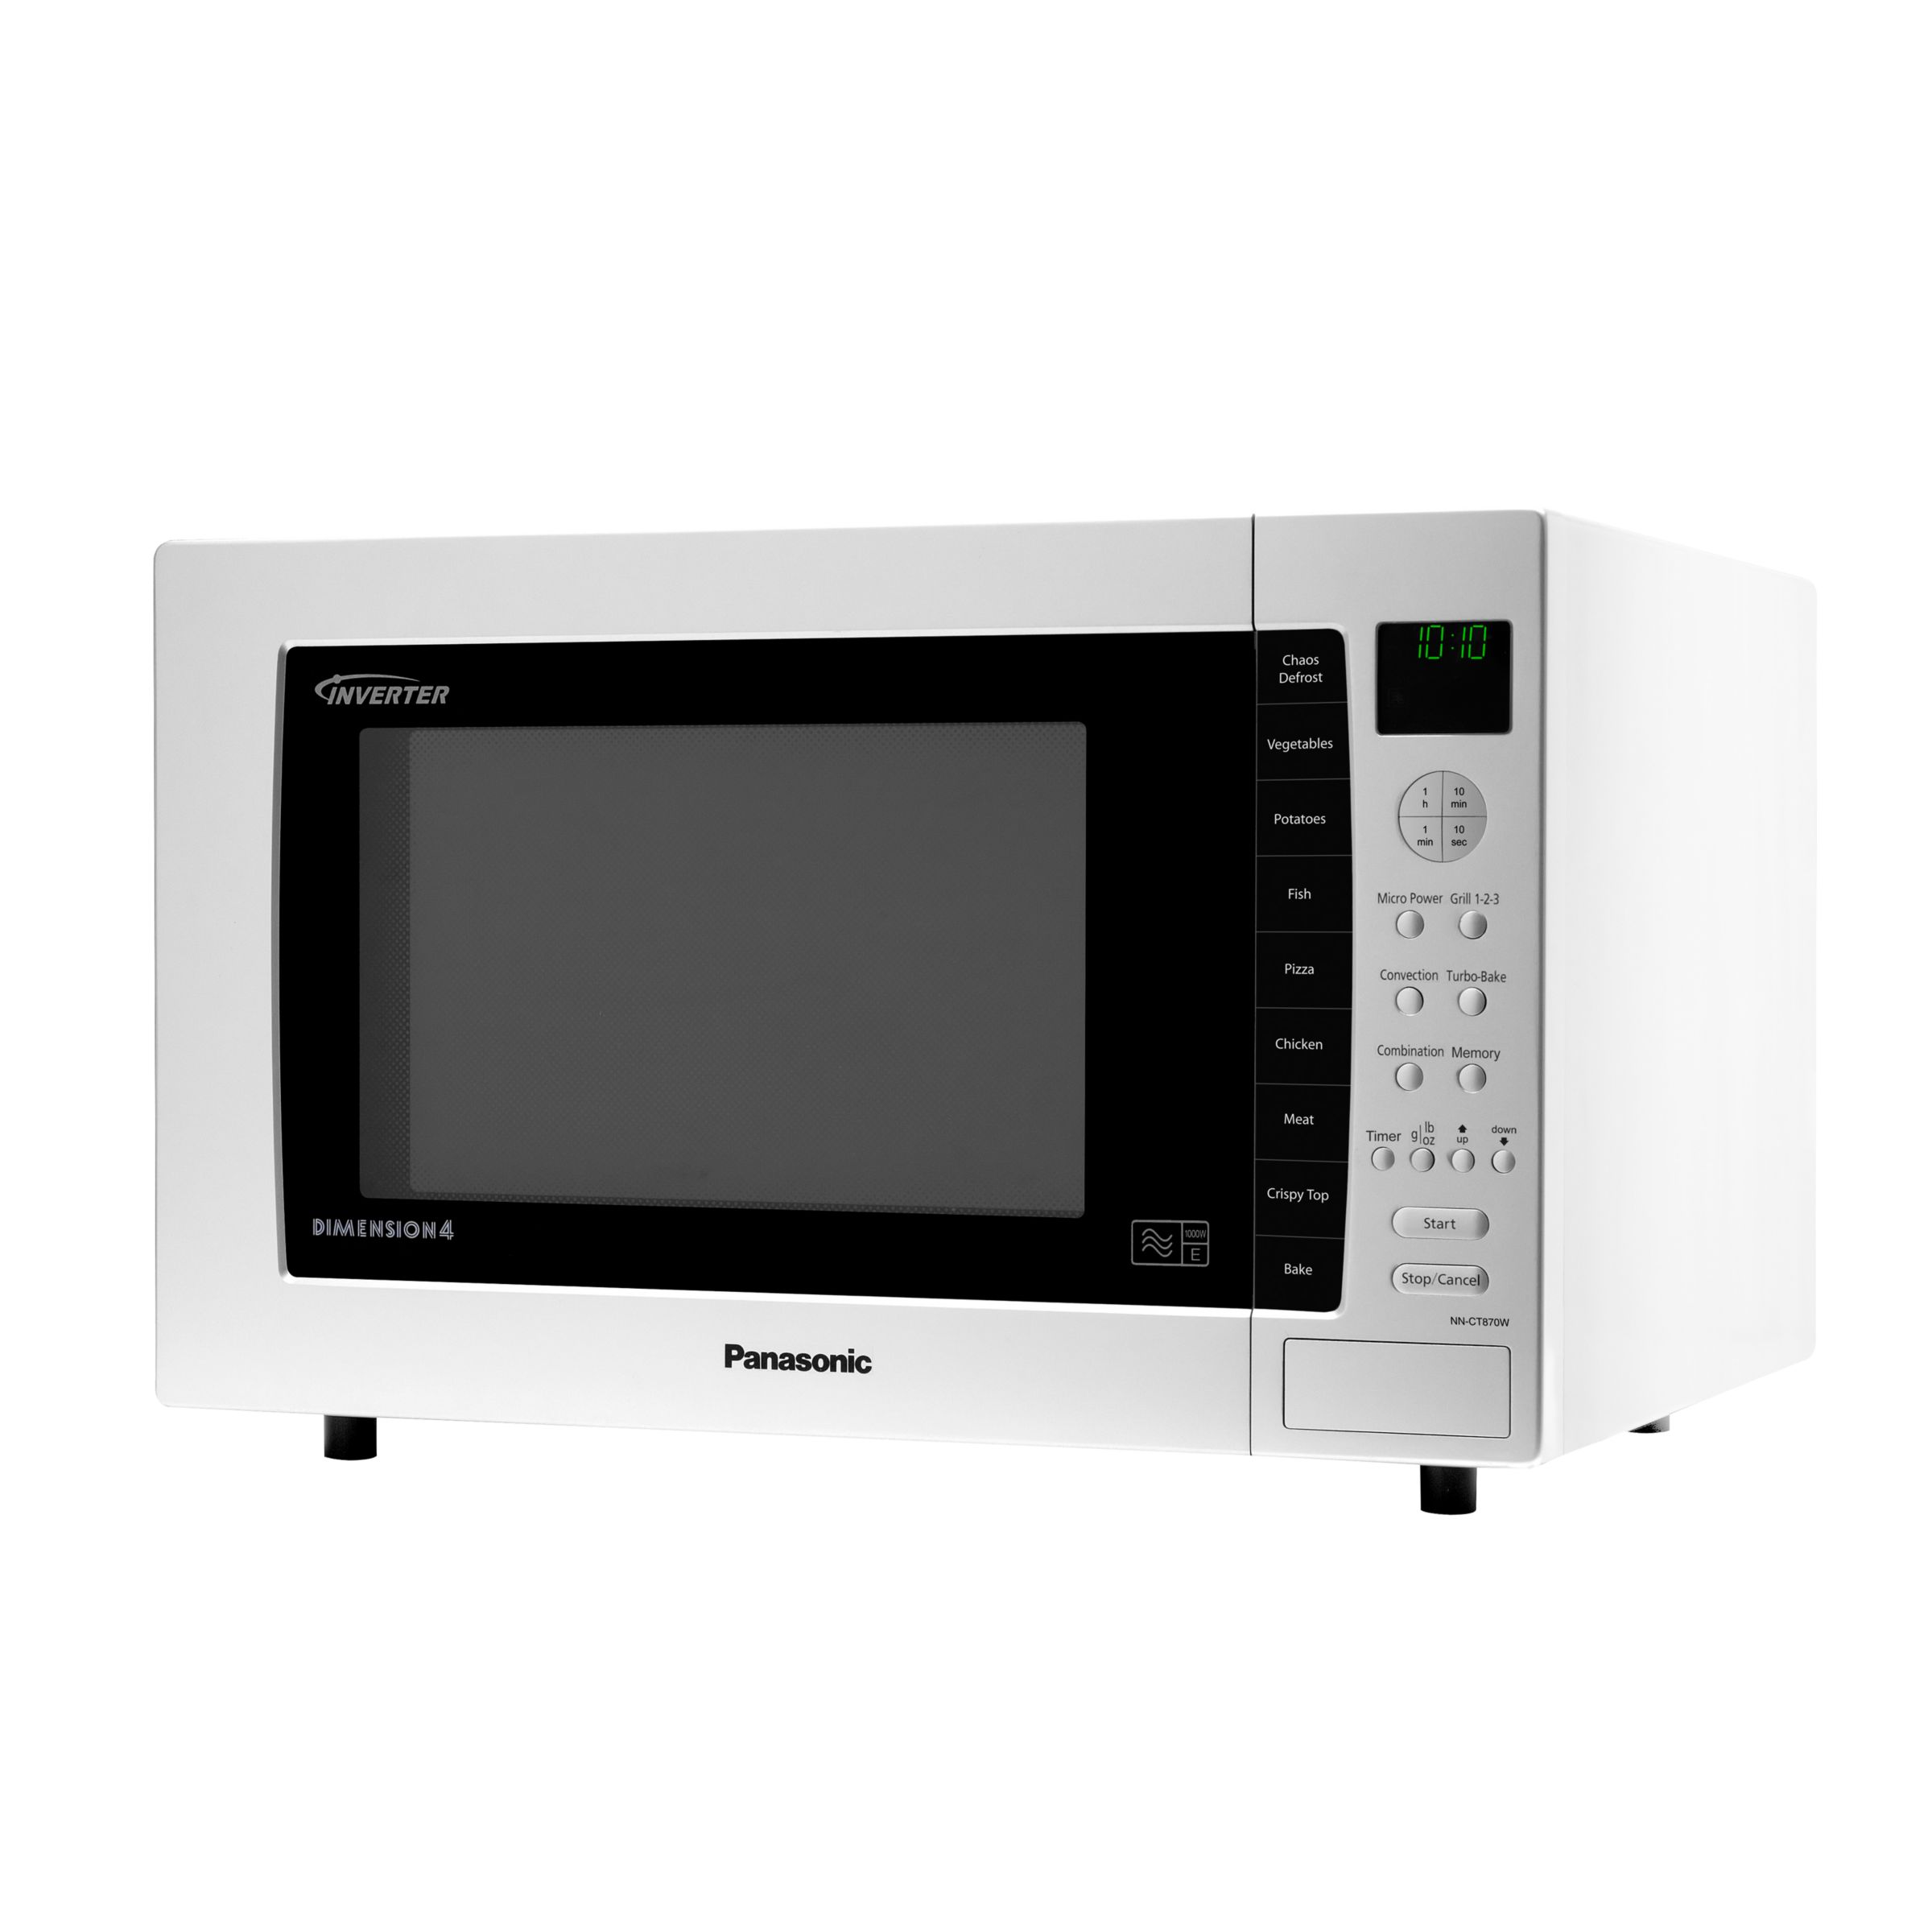 Panasonic NN-CT870WBPQ Combination Microwave Oven, White at John Lewis